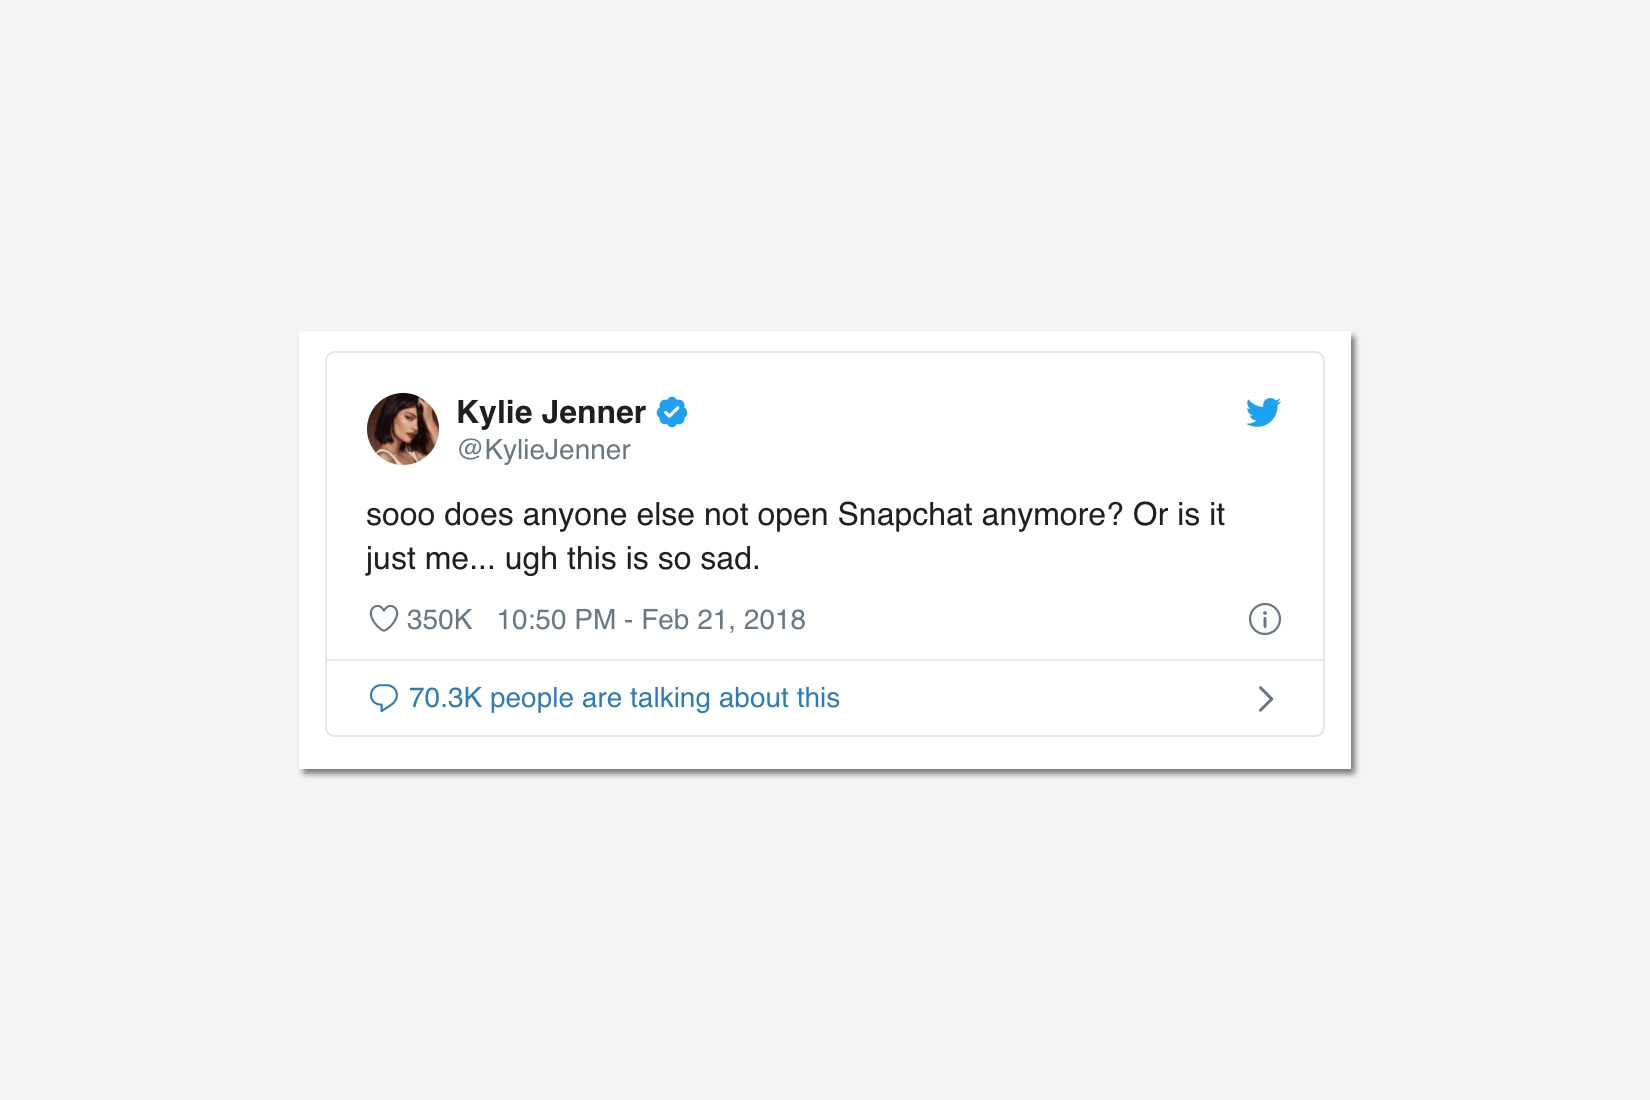 Kylie Jenner Snapchat Twitter post DTC luxury - Luxe Digital